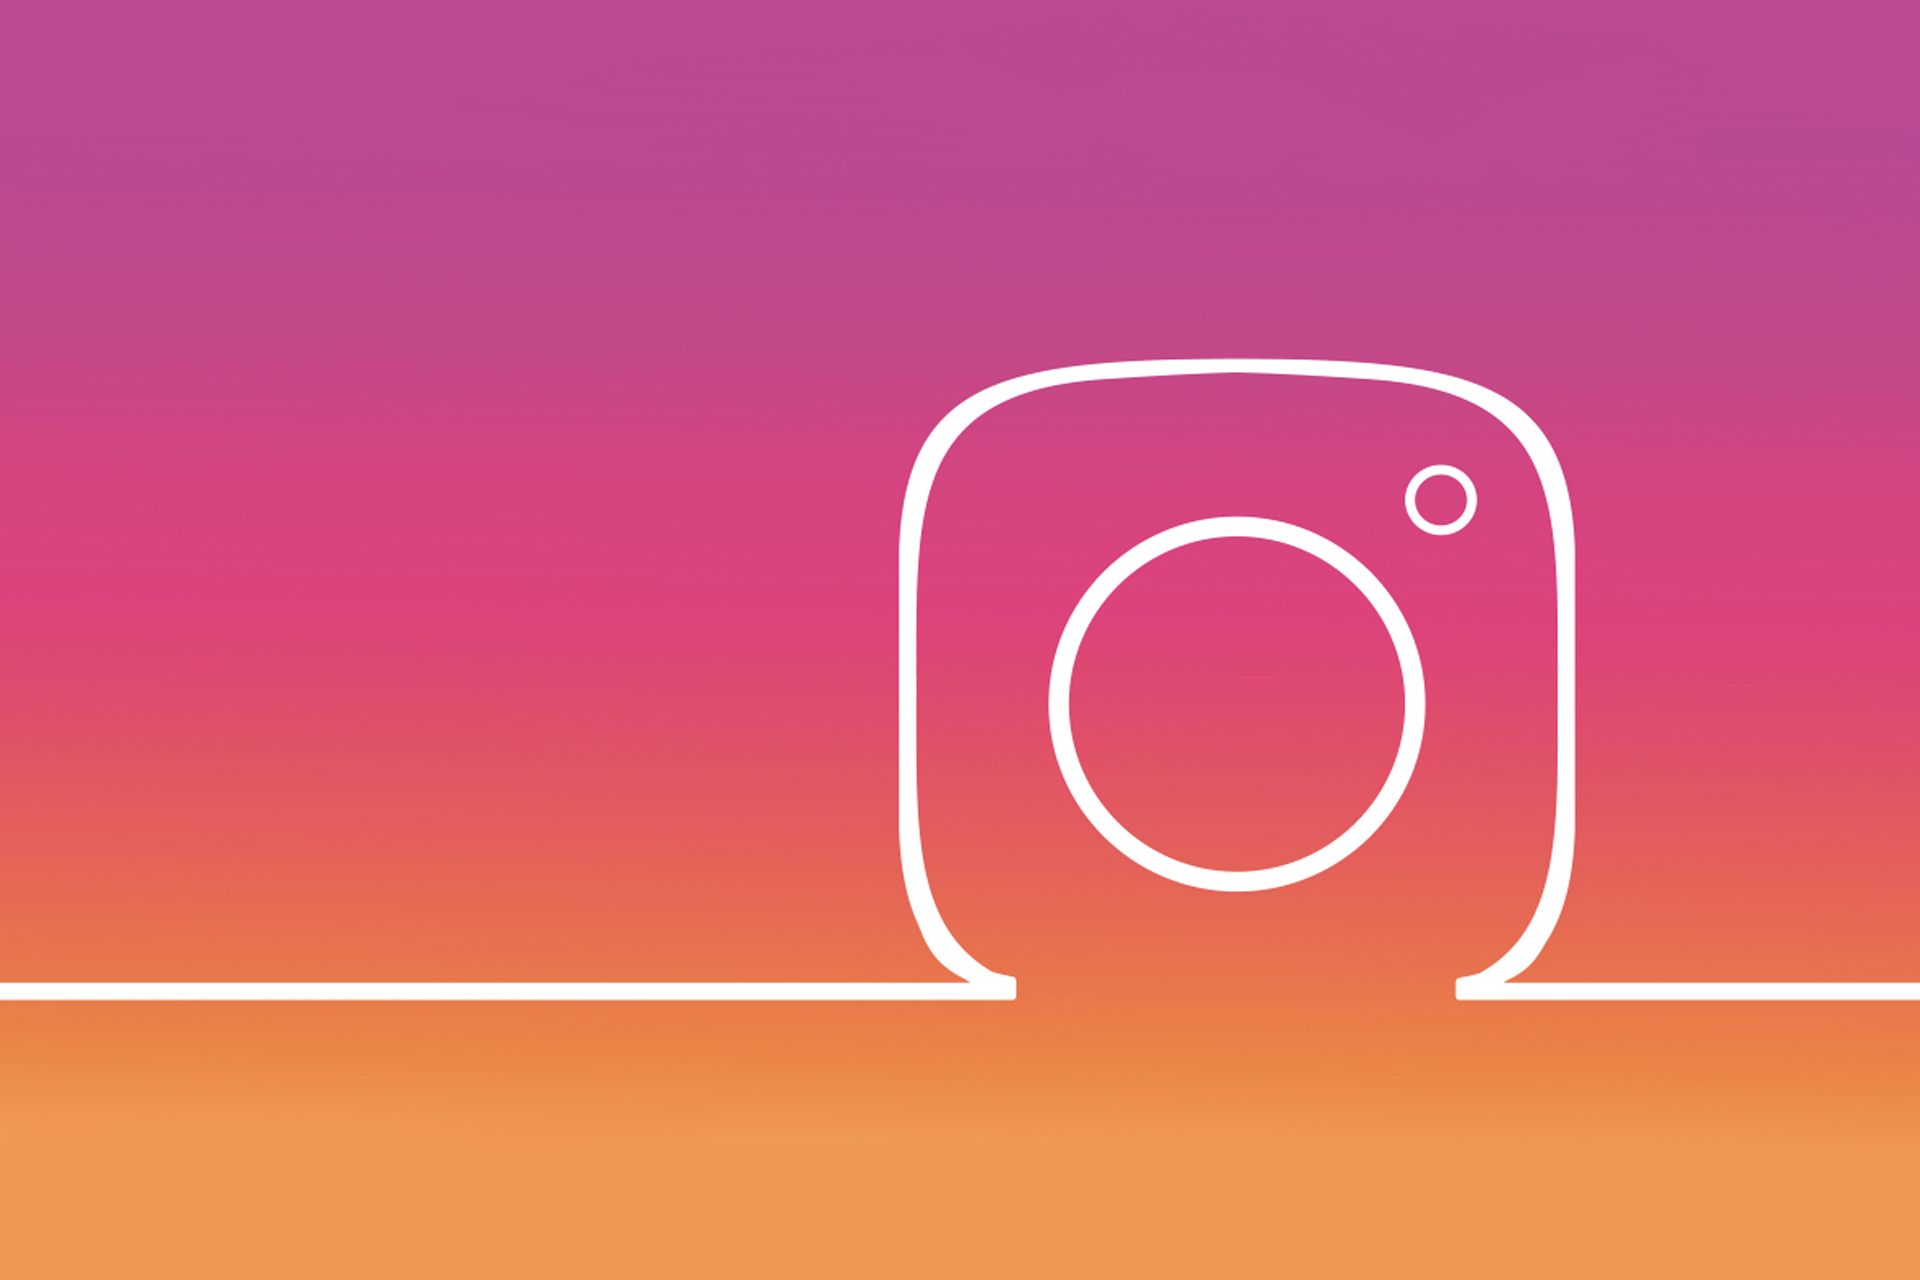 Instagramin yritystili - näin otat yritysprofiilin hyödyt käyttöön